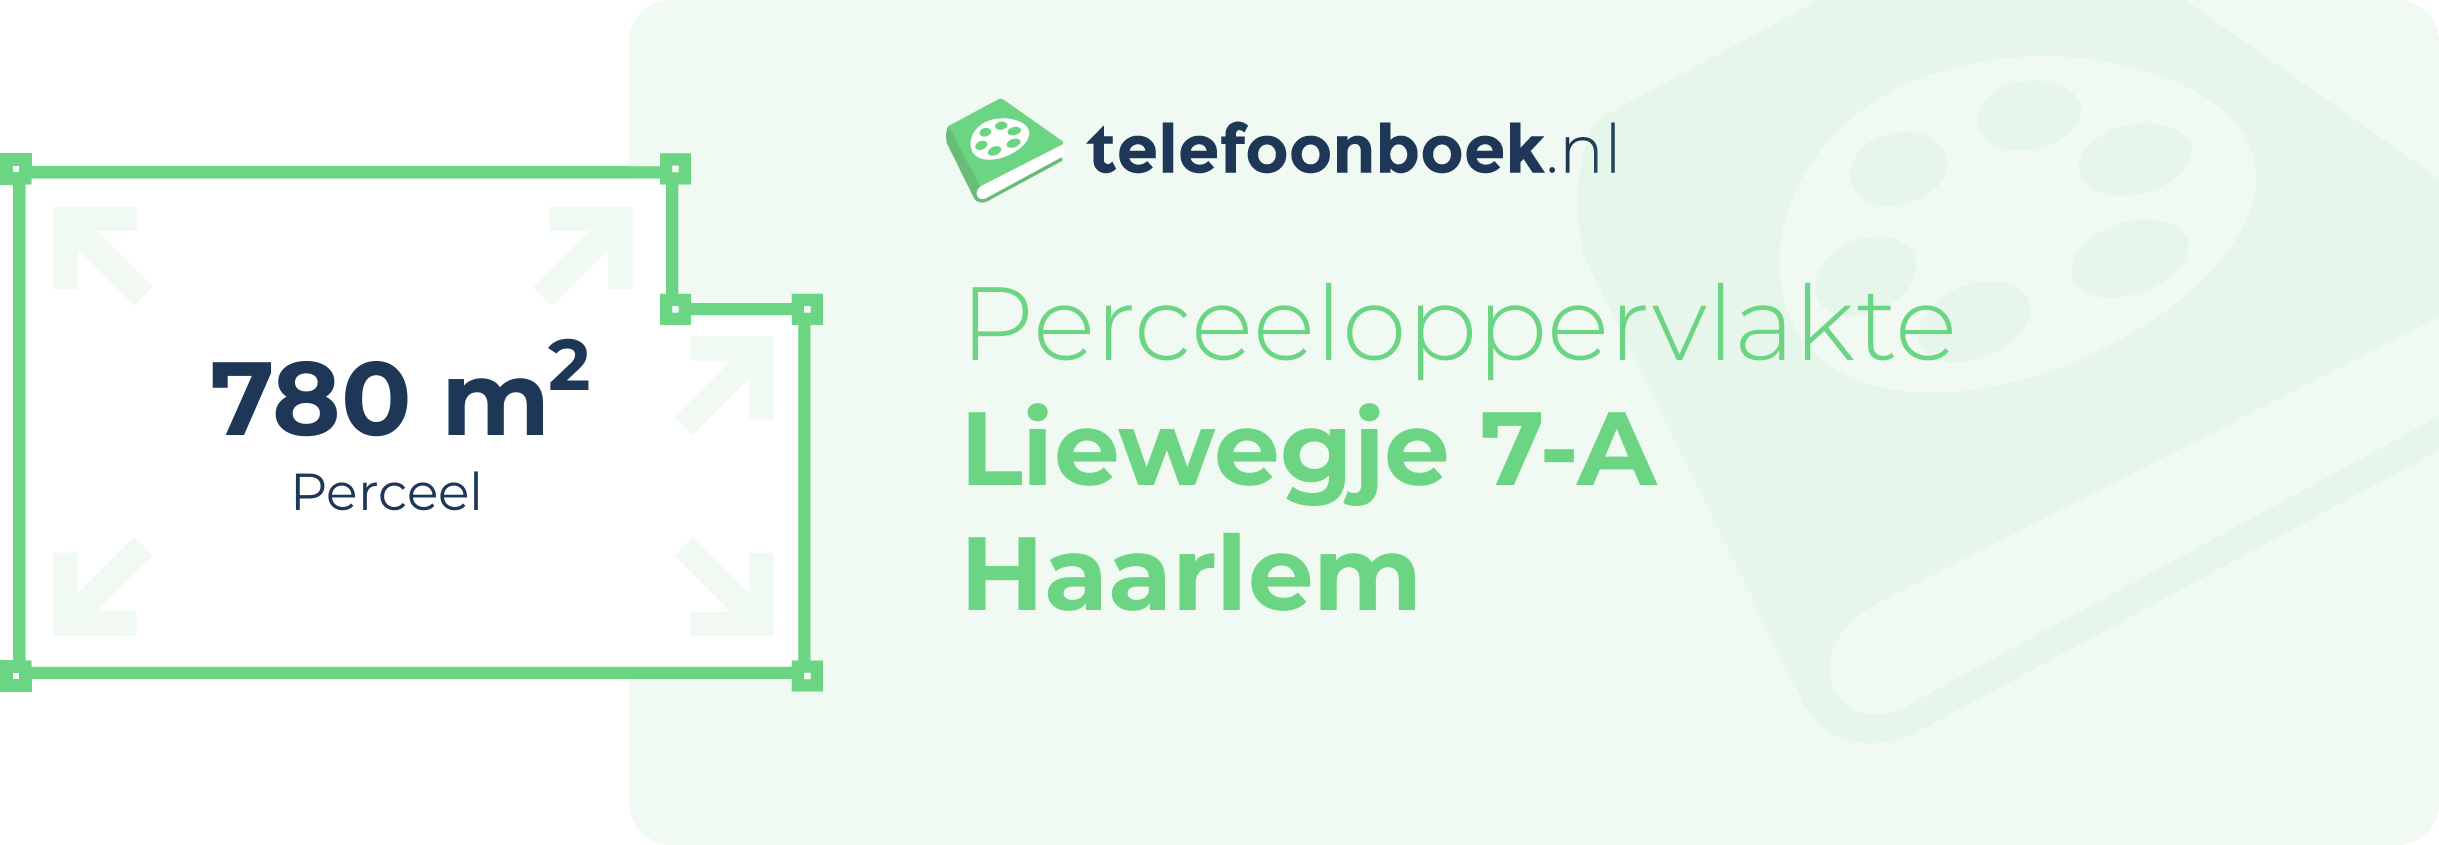 Perceeloppervlakte Liewegje 7-A Haarlem